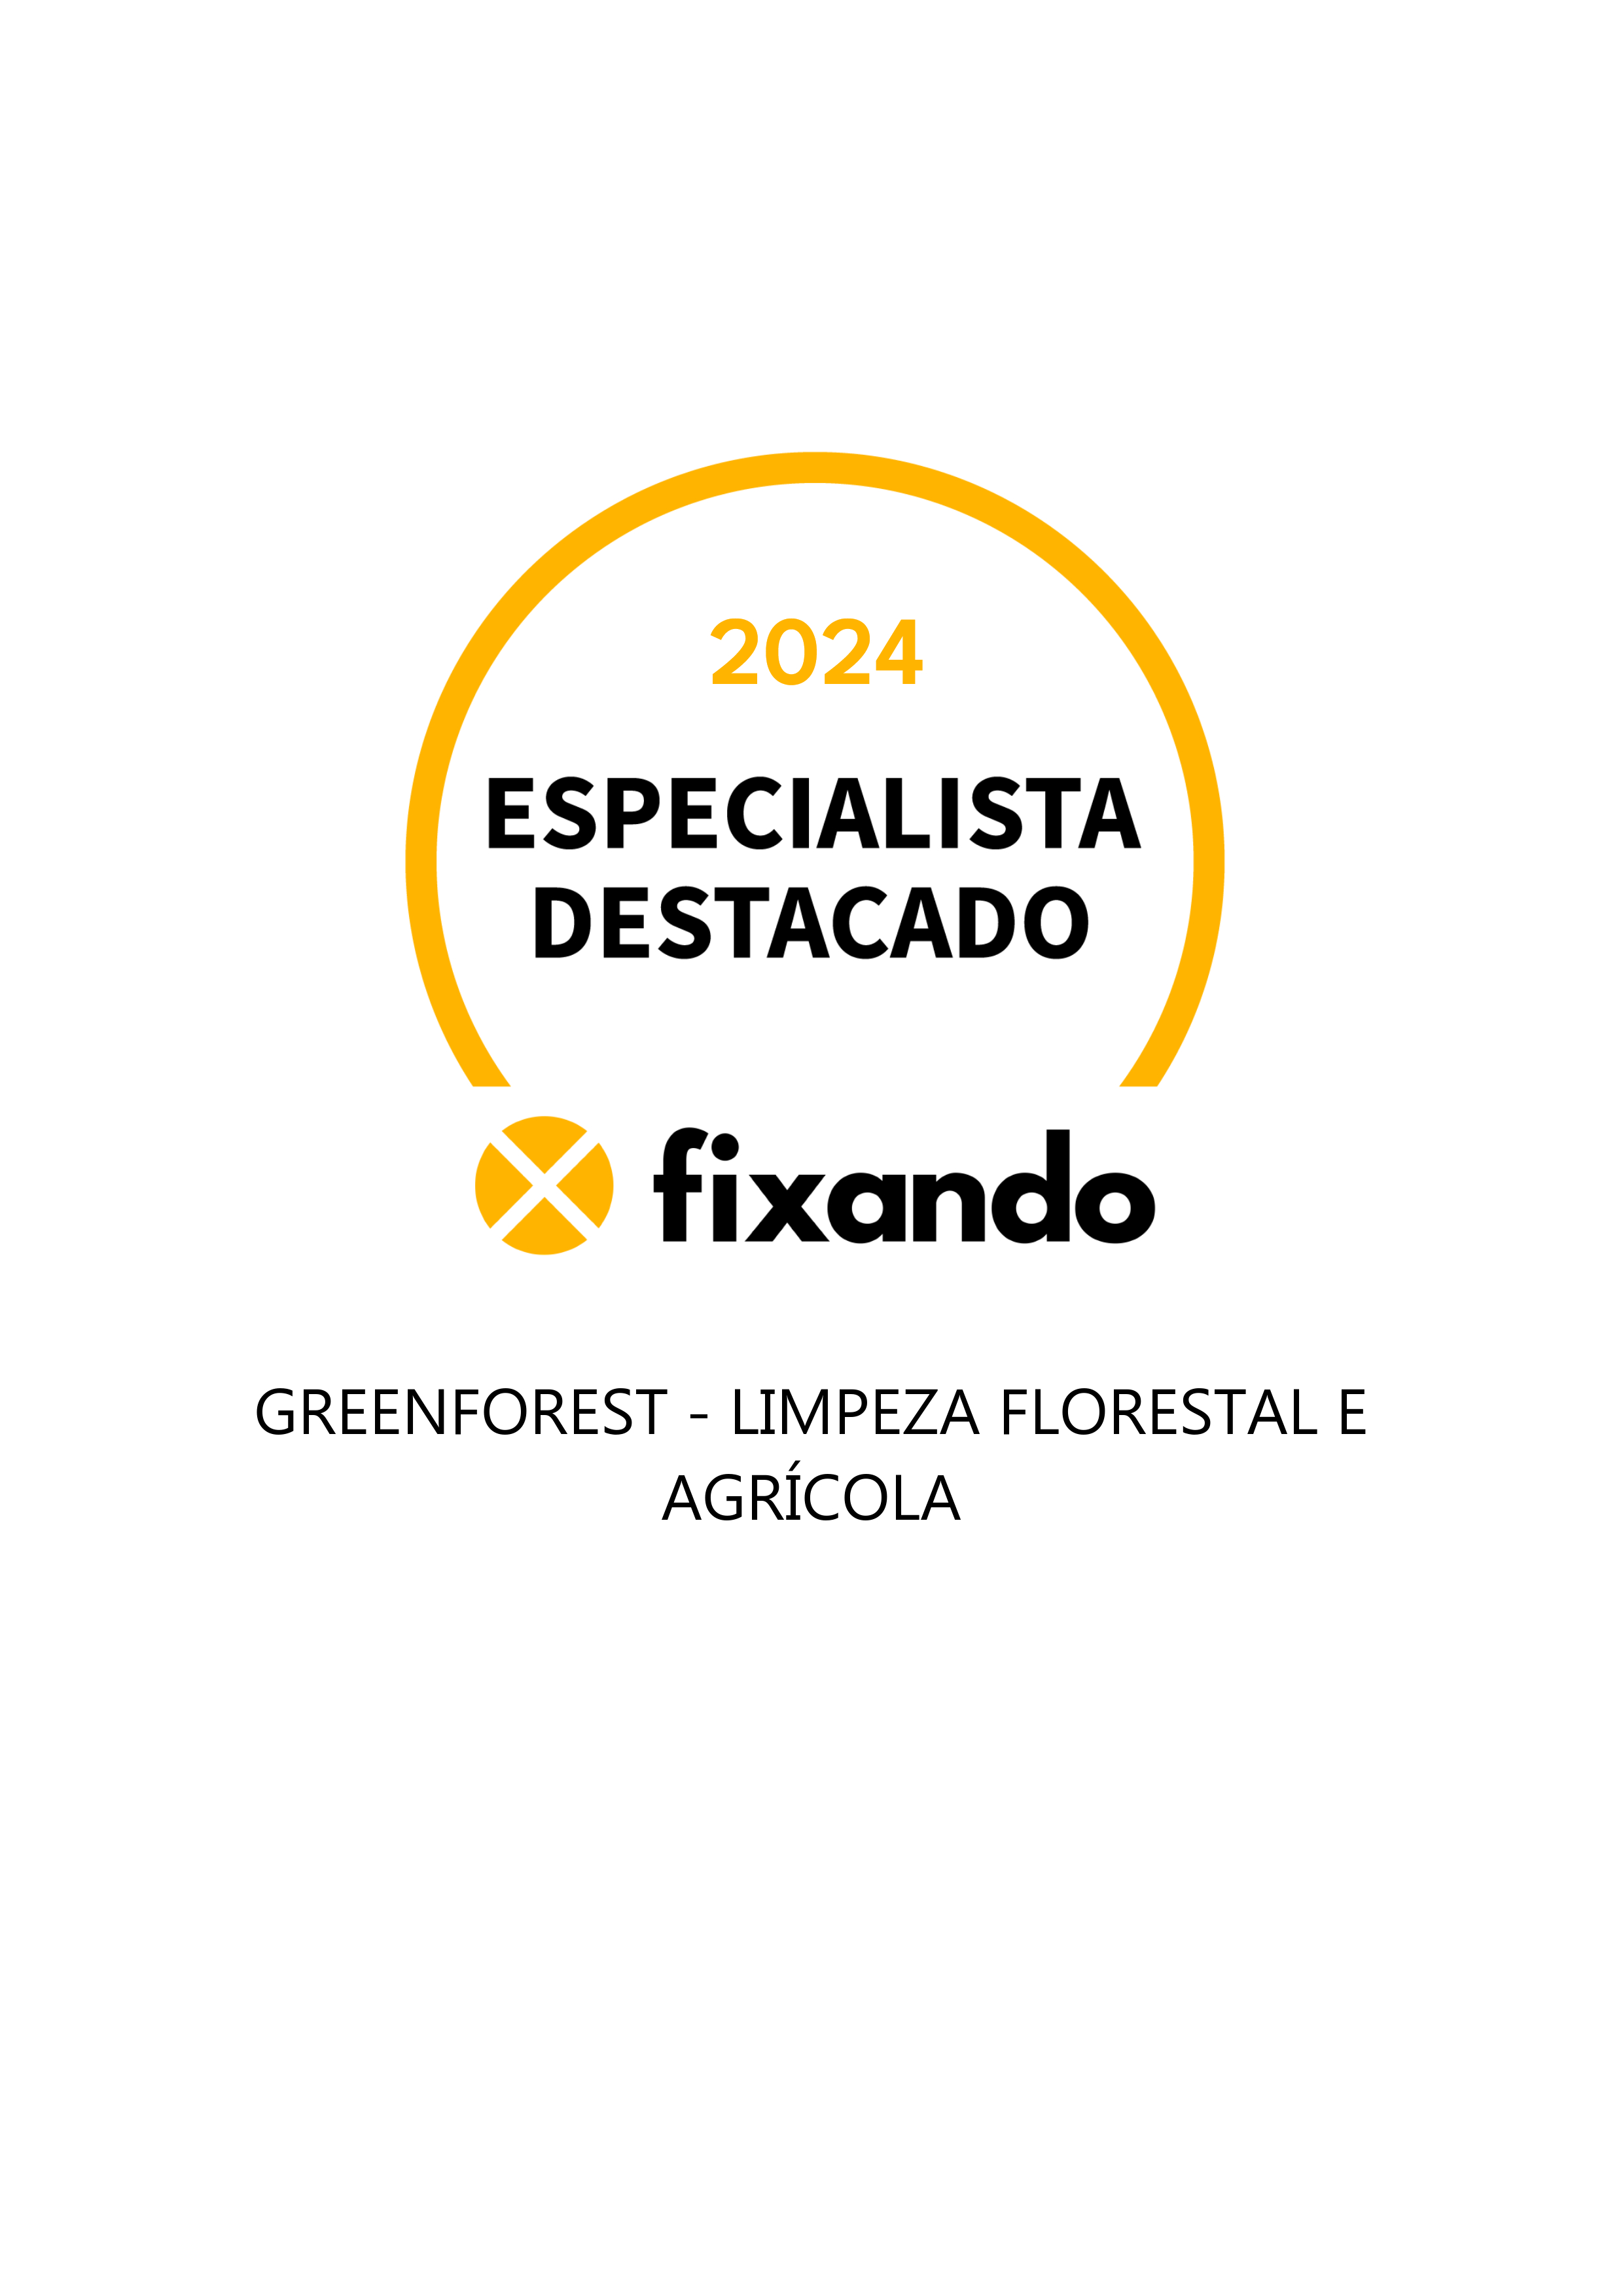 GreenForest - Limpeza florestal e agrícola - Ílhavo - Serviço de Bobcat